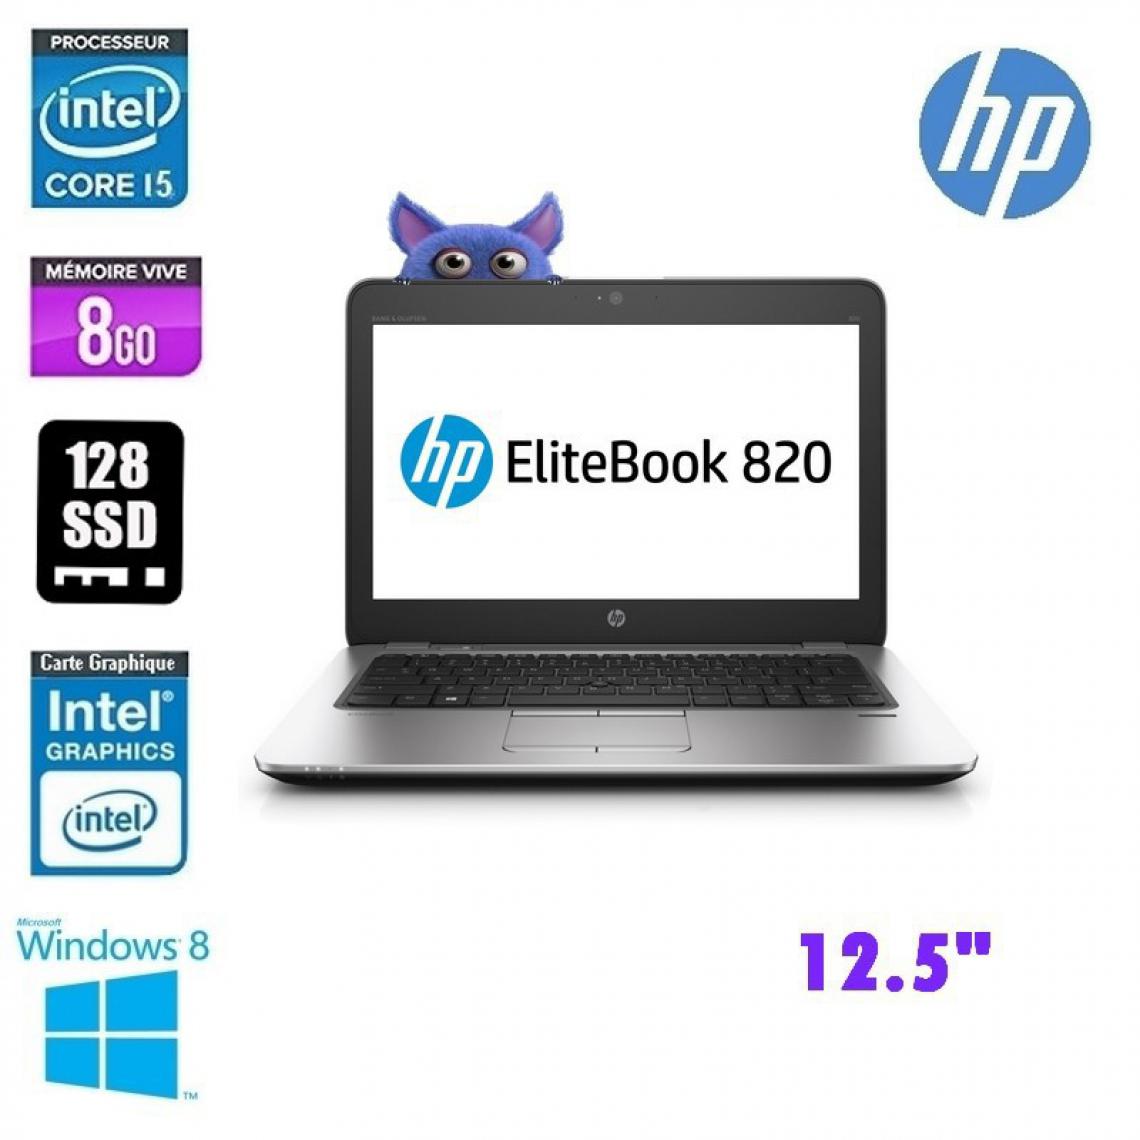 Hp - HP ELITEBOOK 820 G3 CORE I5 6300U 2.4Ghz - PC Portable